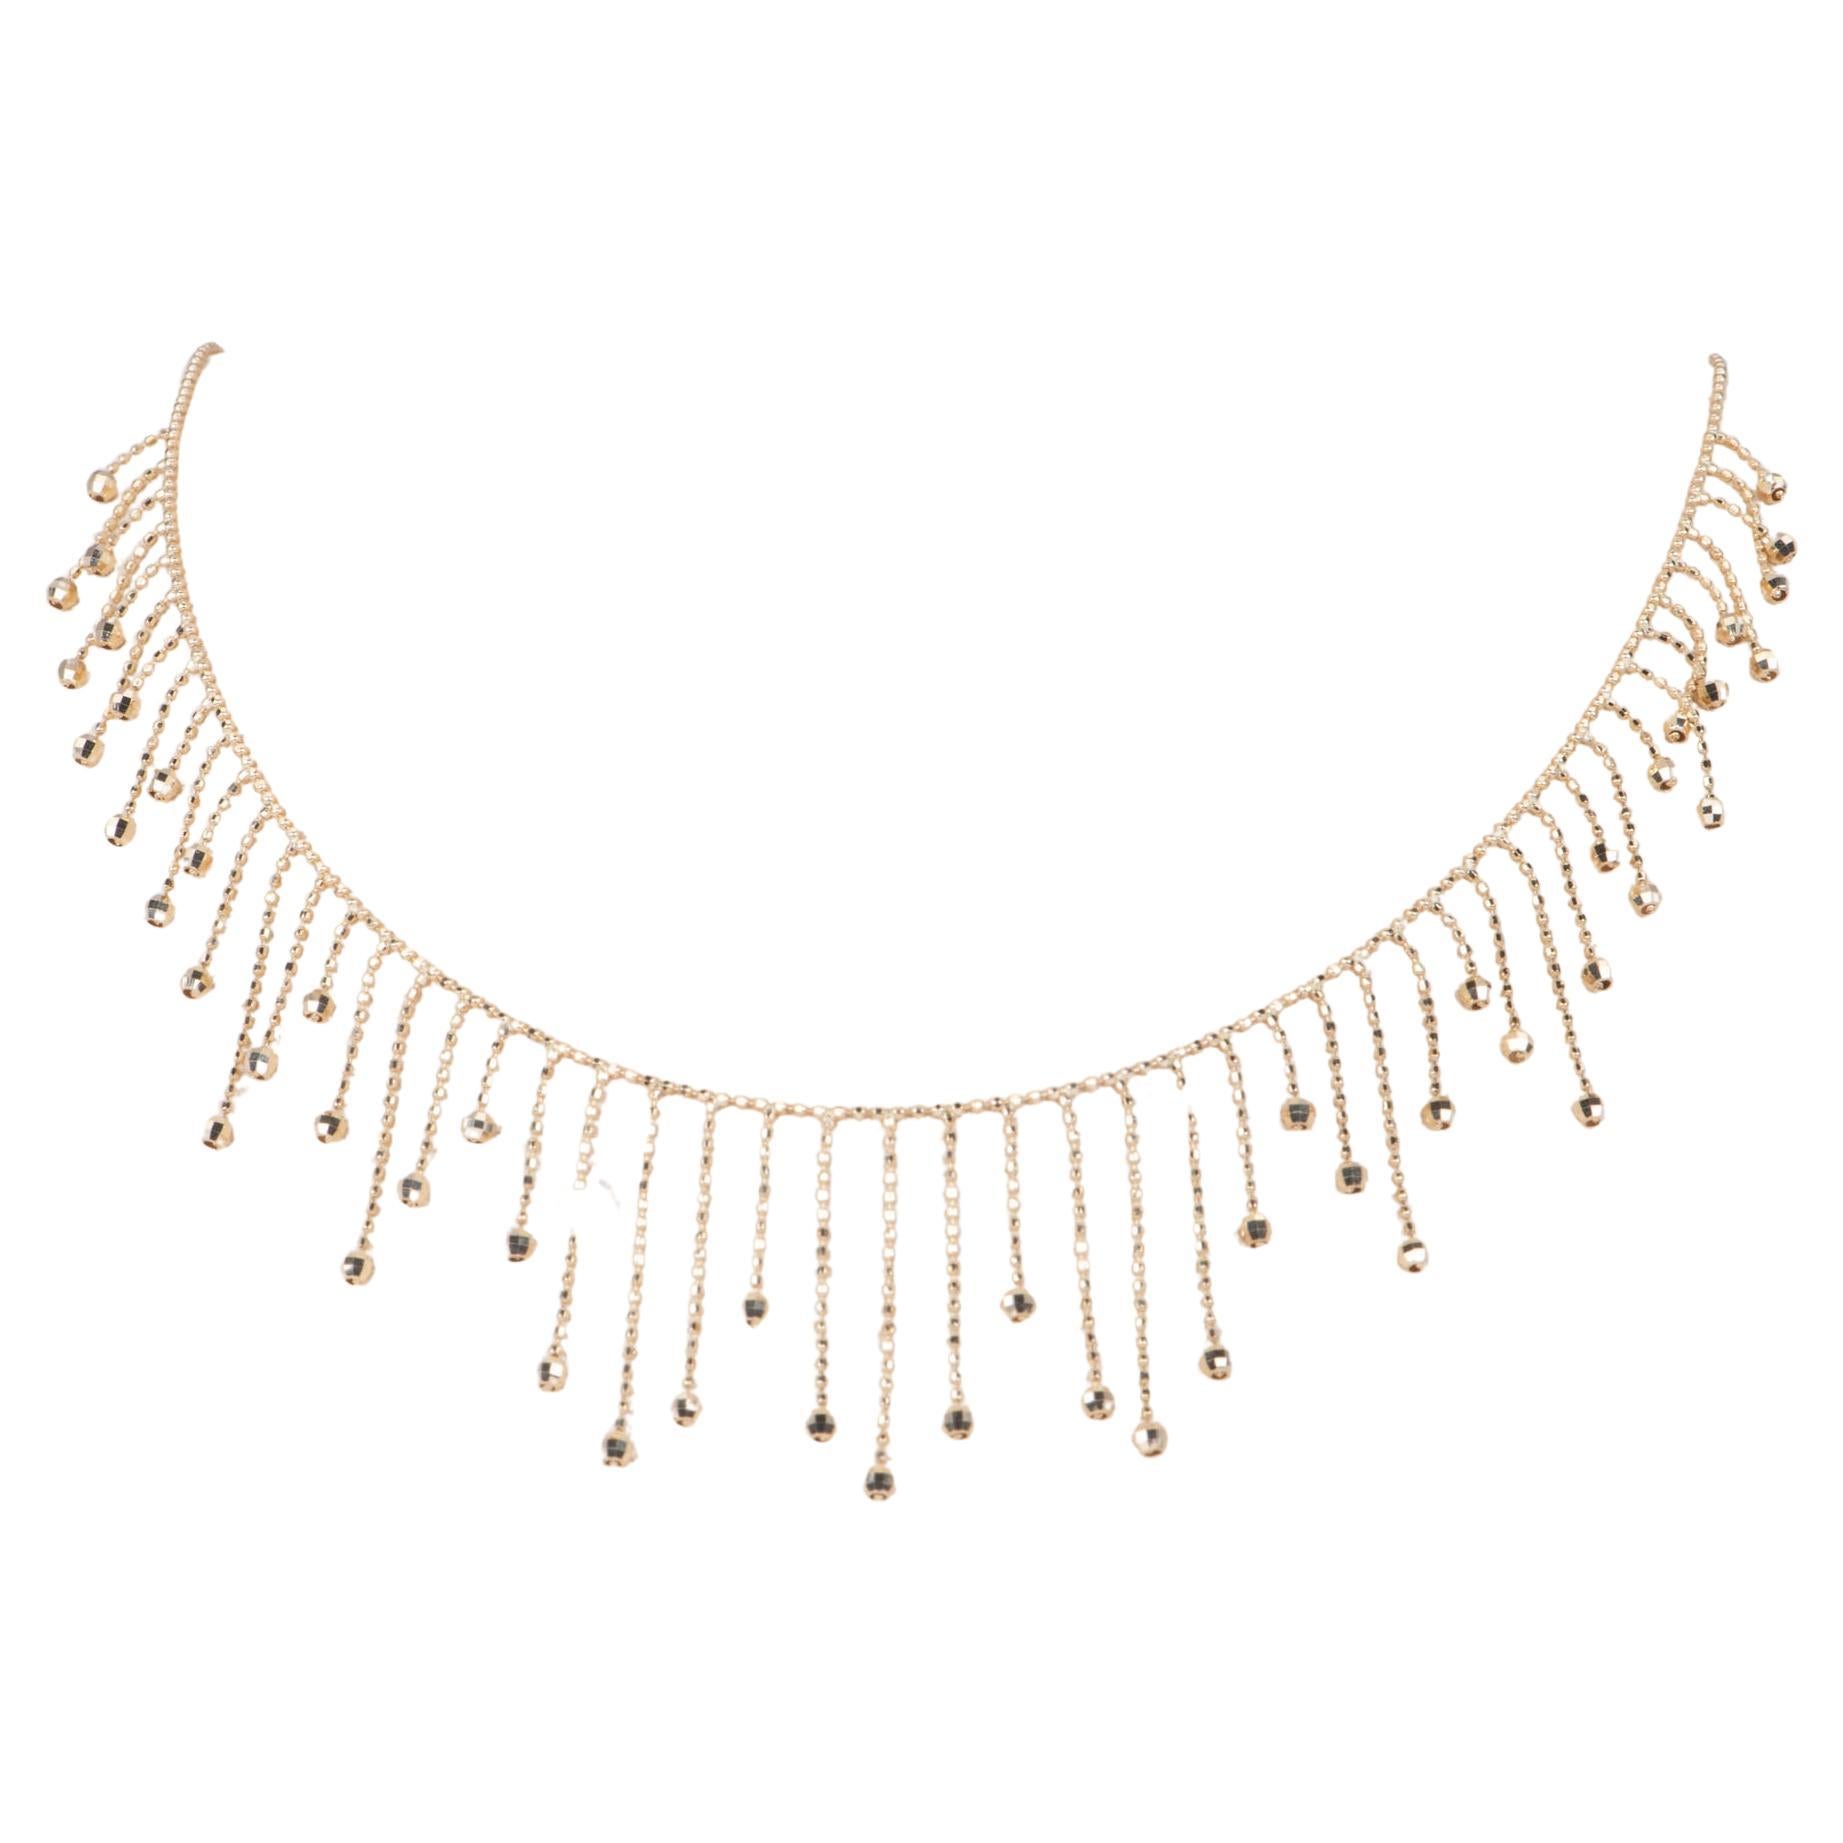 18K Gold Beaded Lace Fringe Necklace 5.88g For Sale